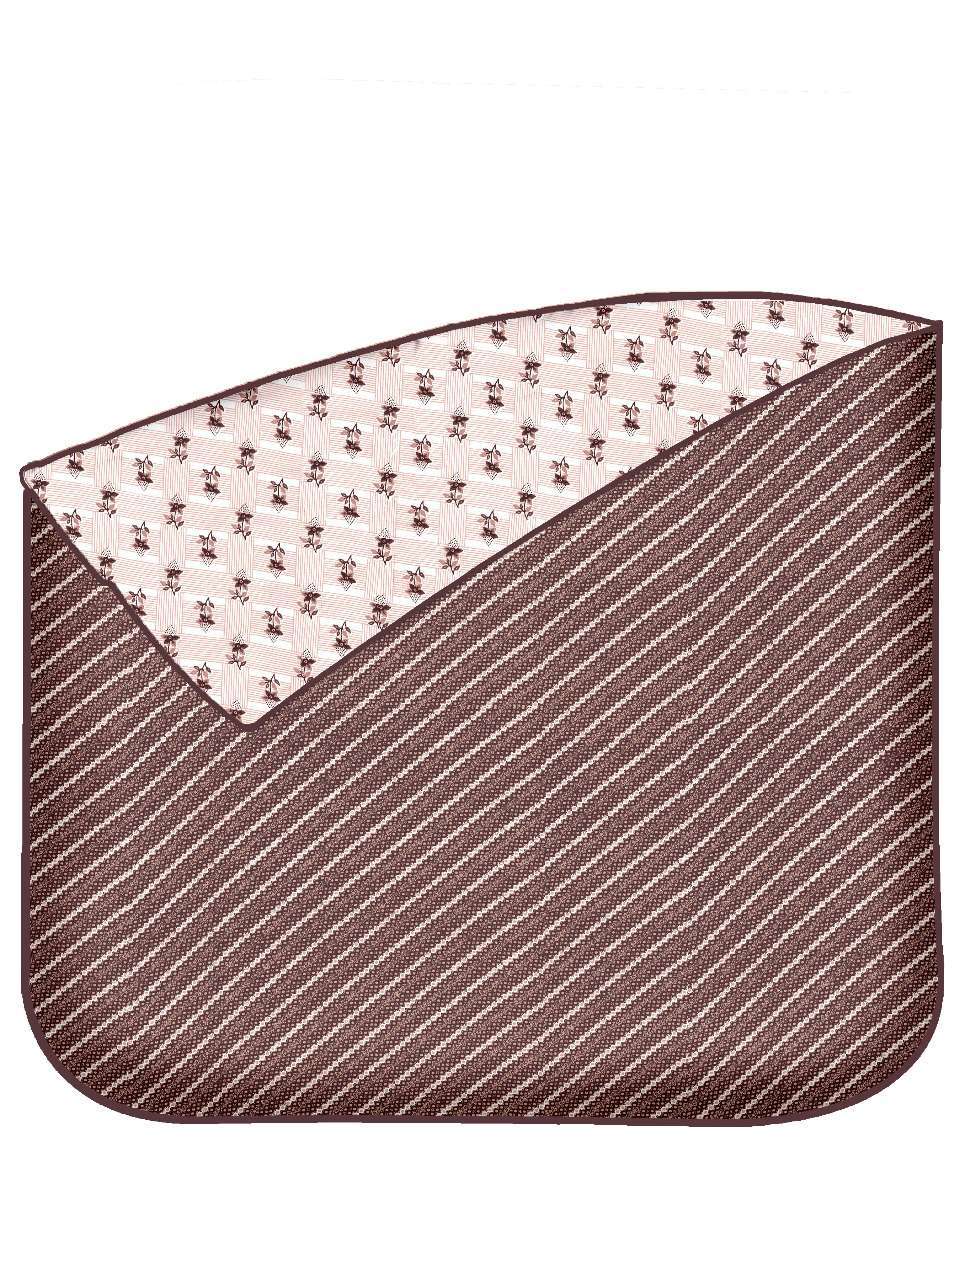 pr premium dohar reversible cotton cambric singel bed dohar